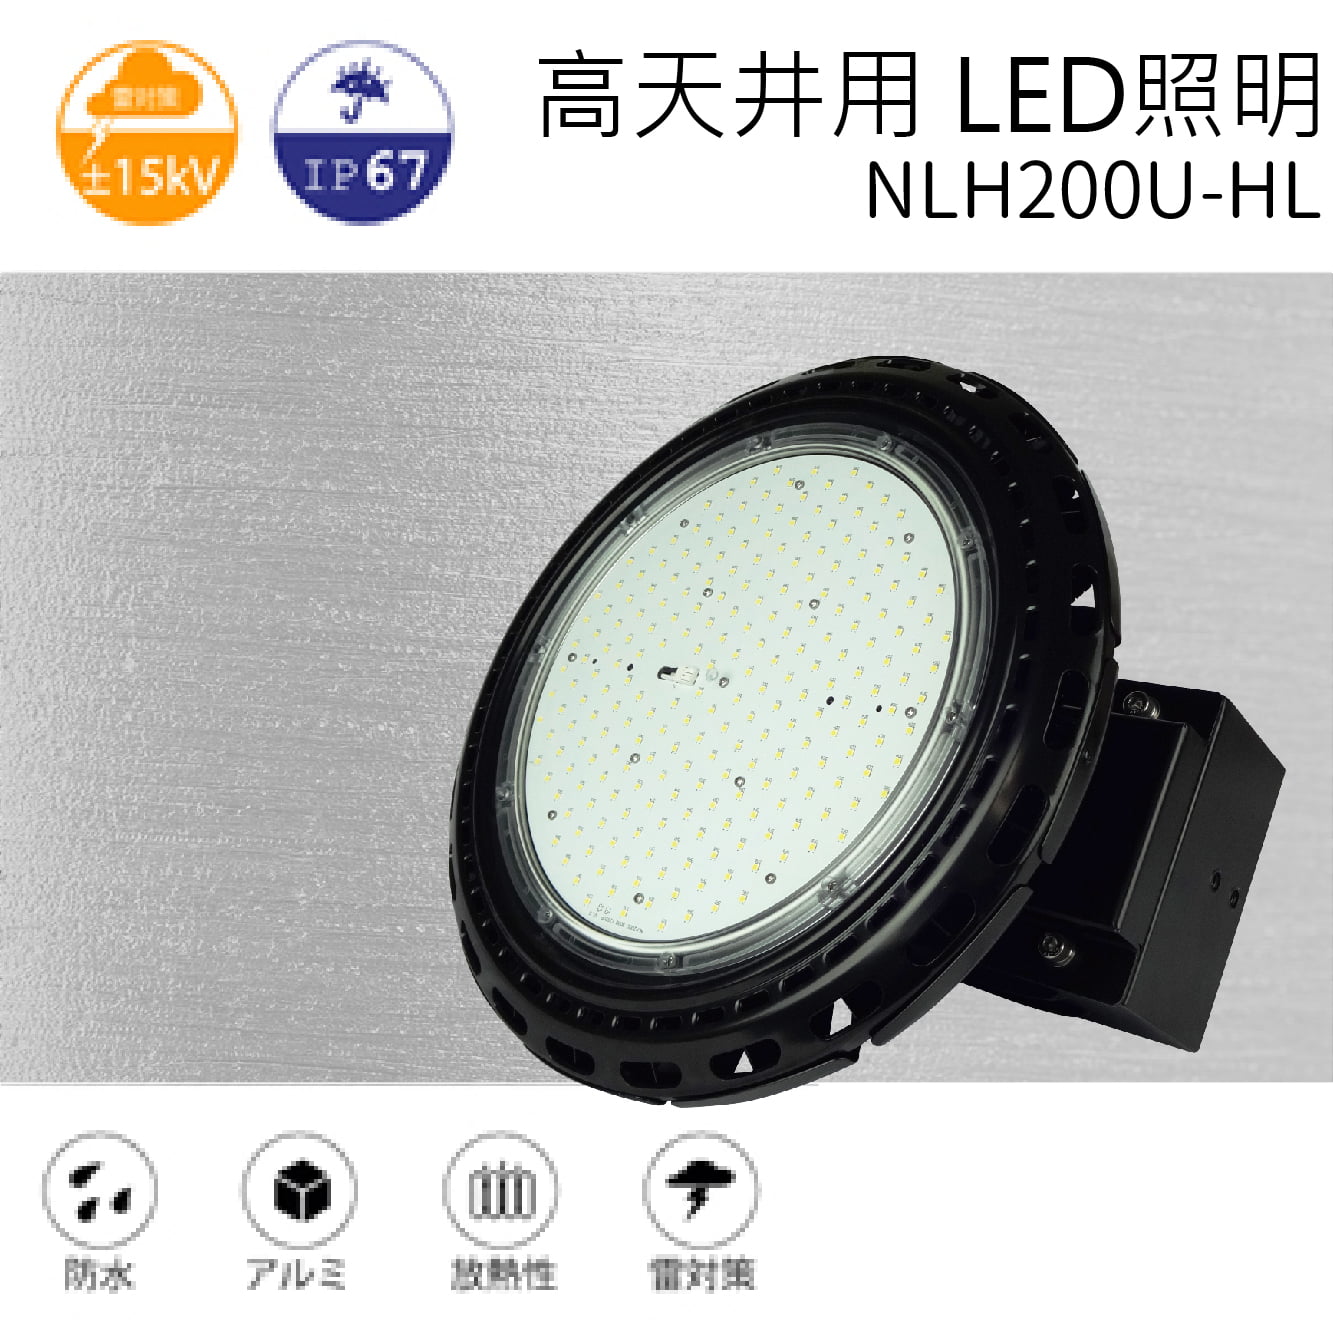 LED 天井照明燈180W NLH200U-HL - 日機線上購物